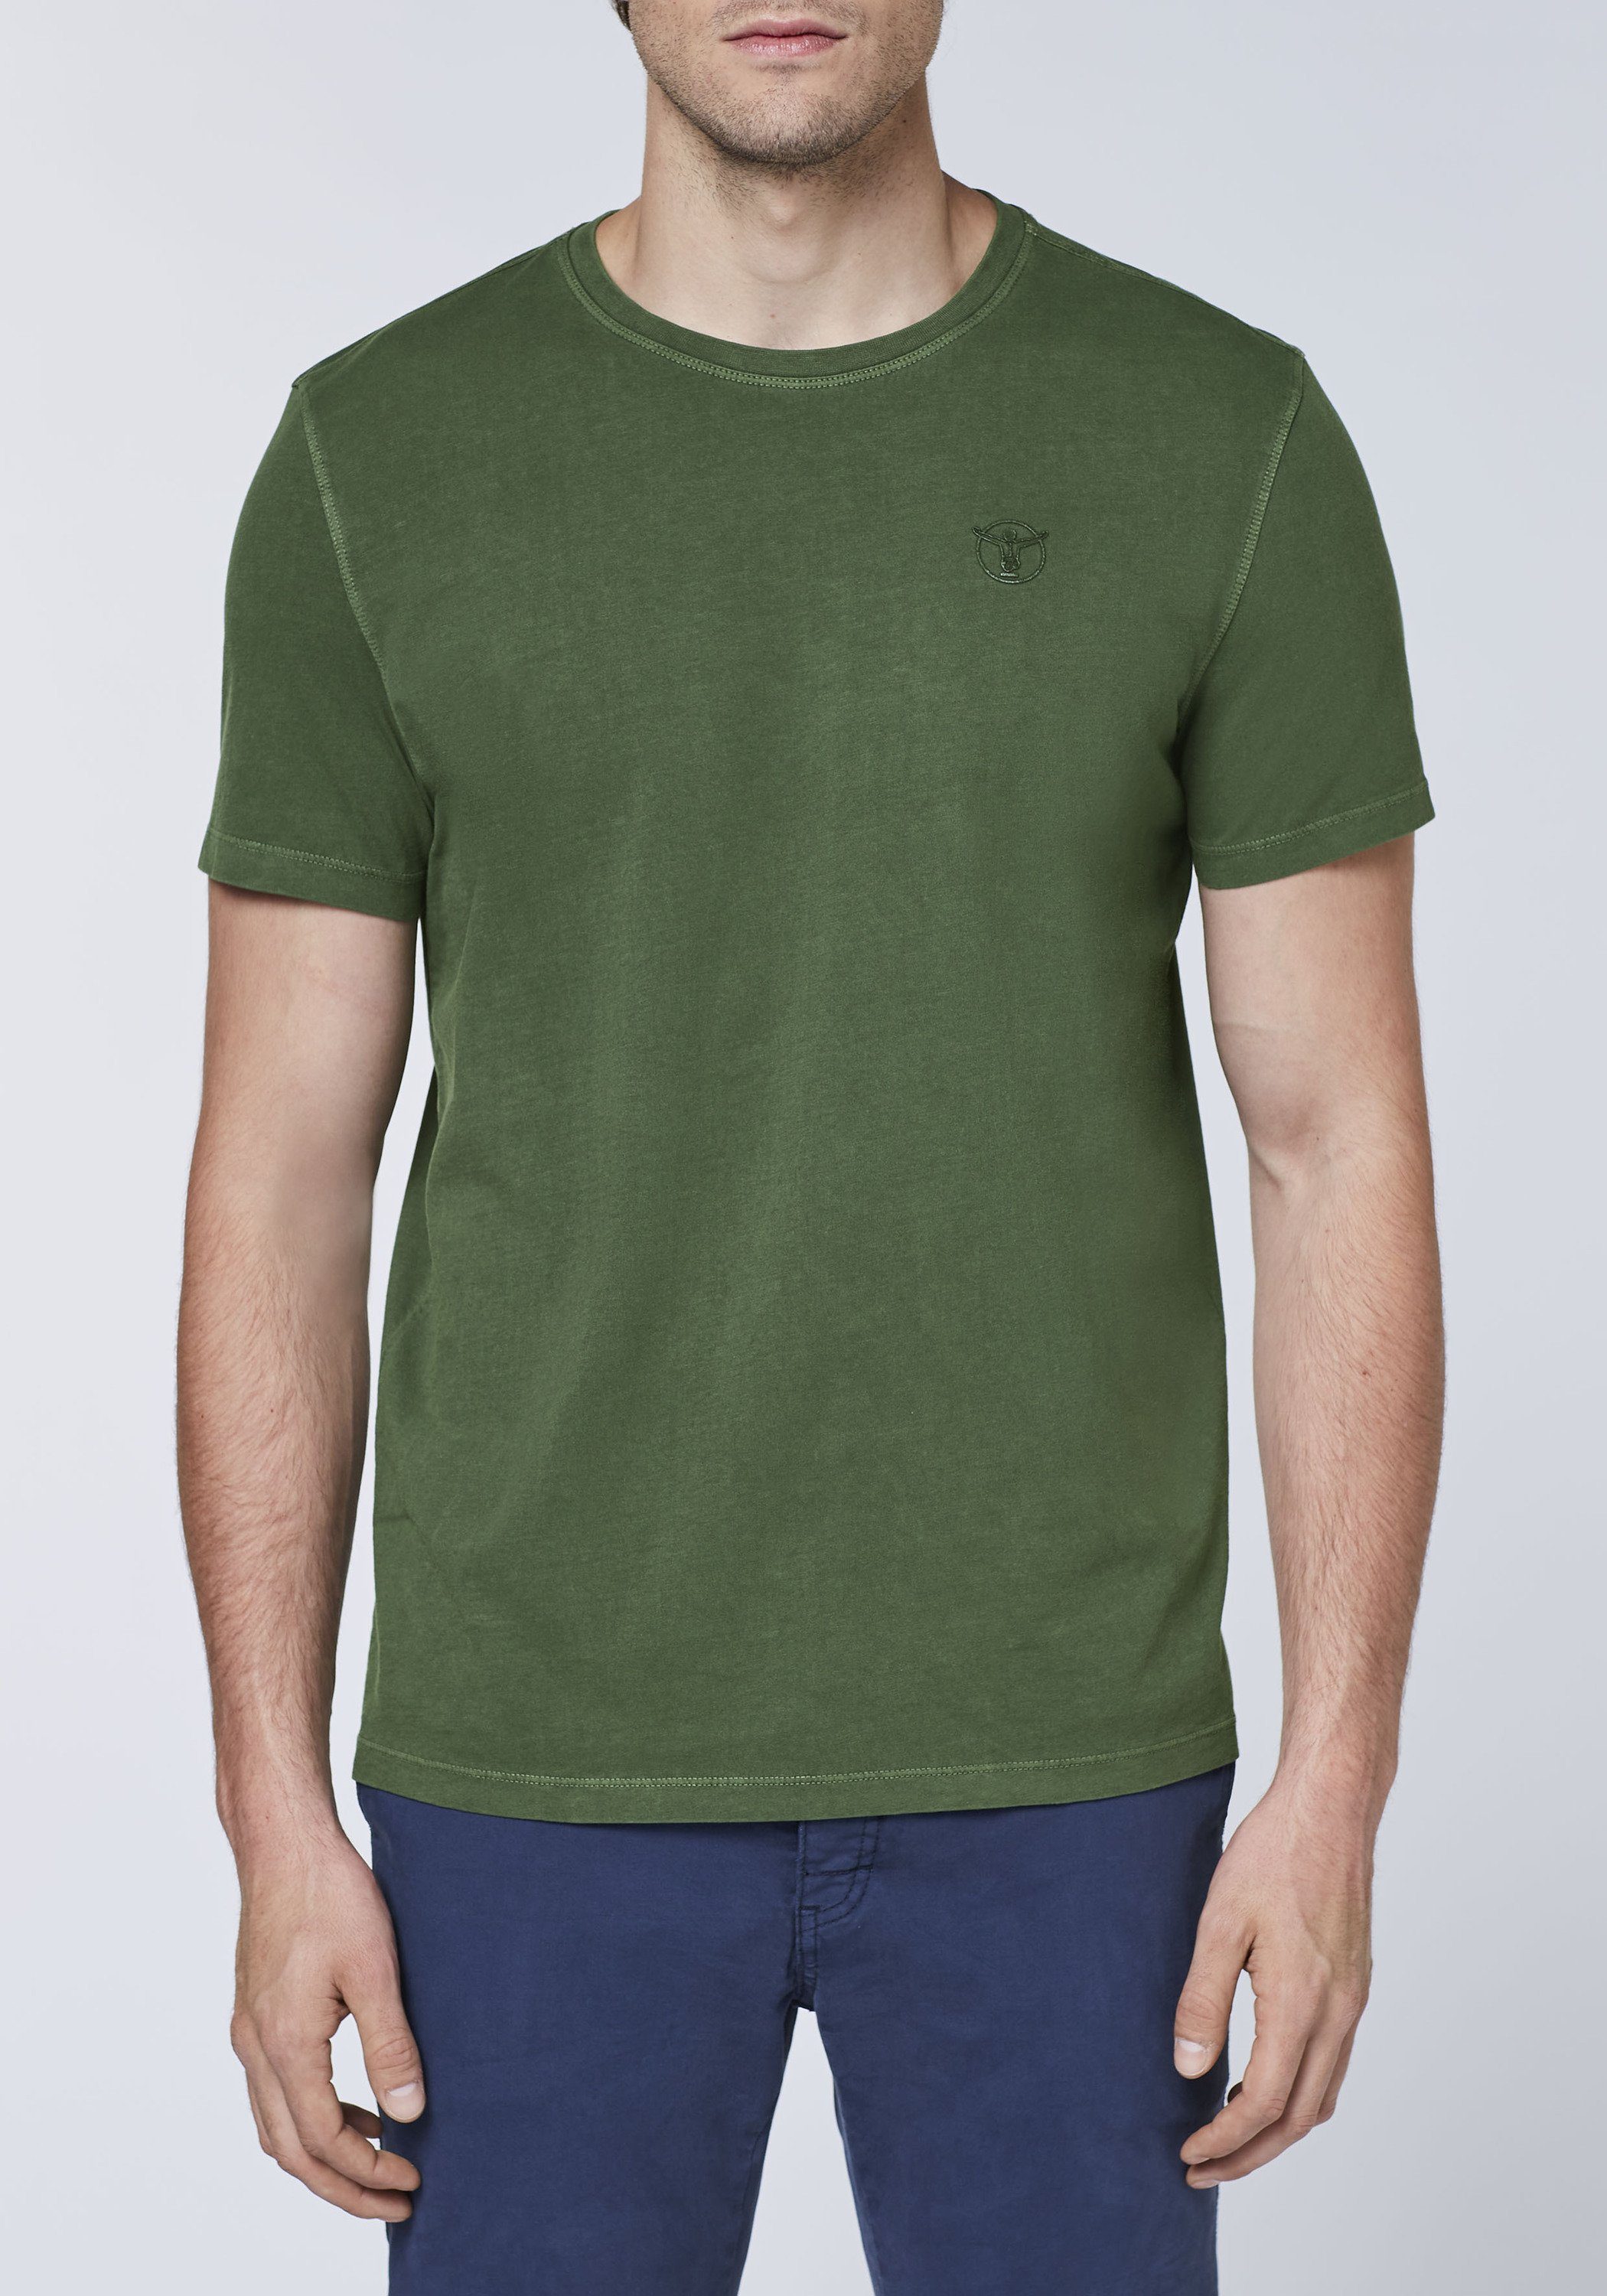 Chiemsee Print-Shirt T-Shirt aus 19-0417 Baumwolle 1 Green Kombu